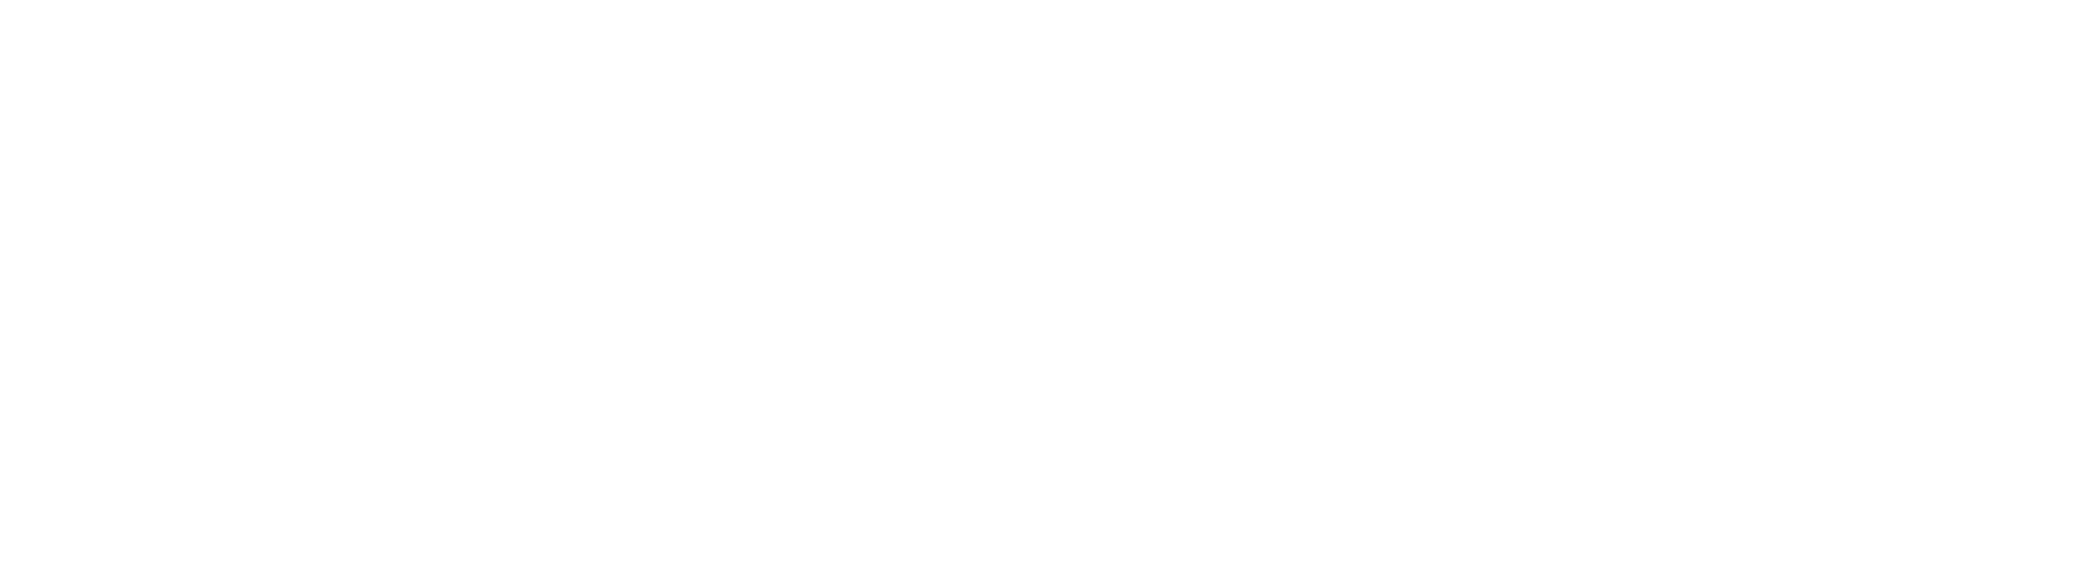 ions-logo-white